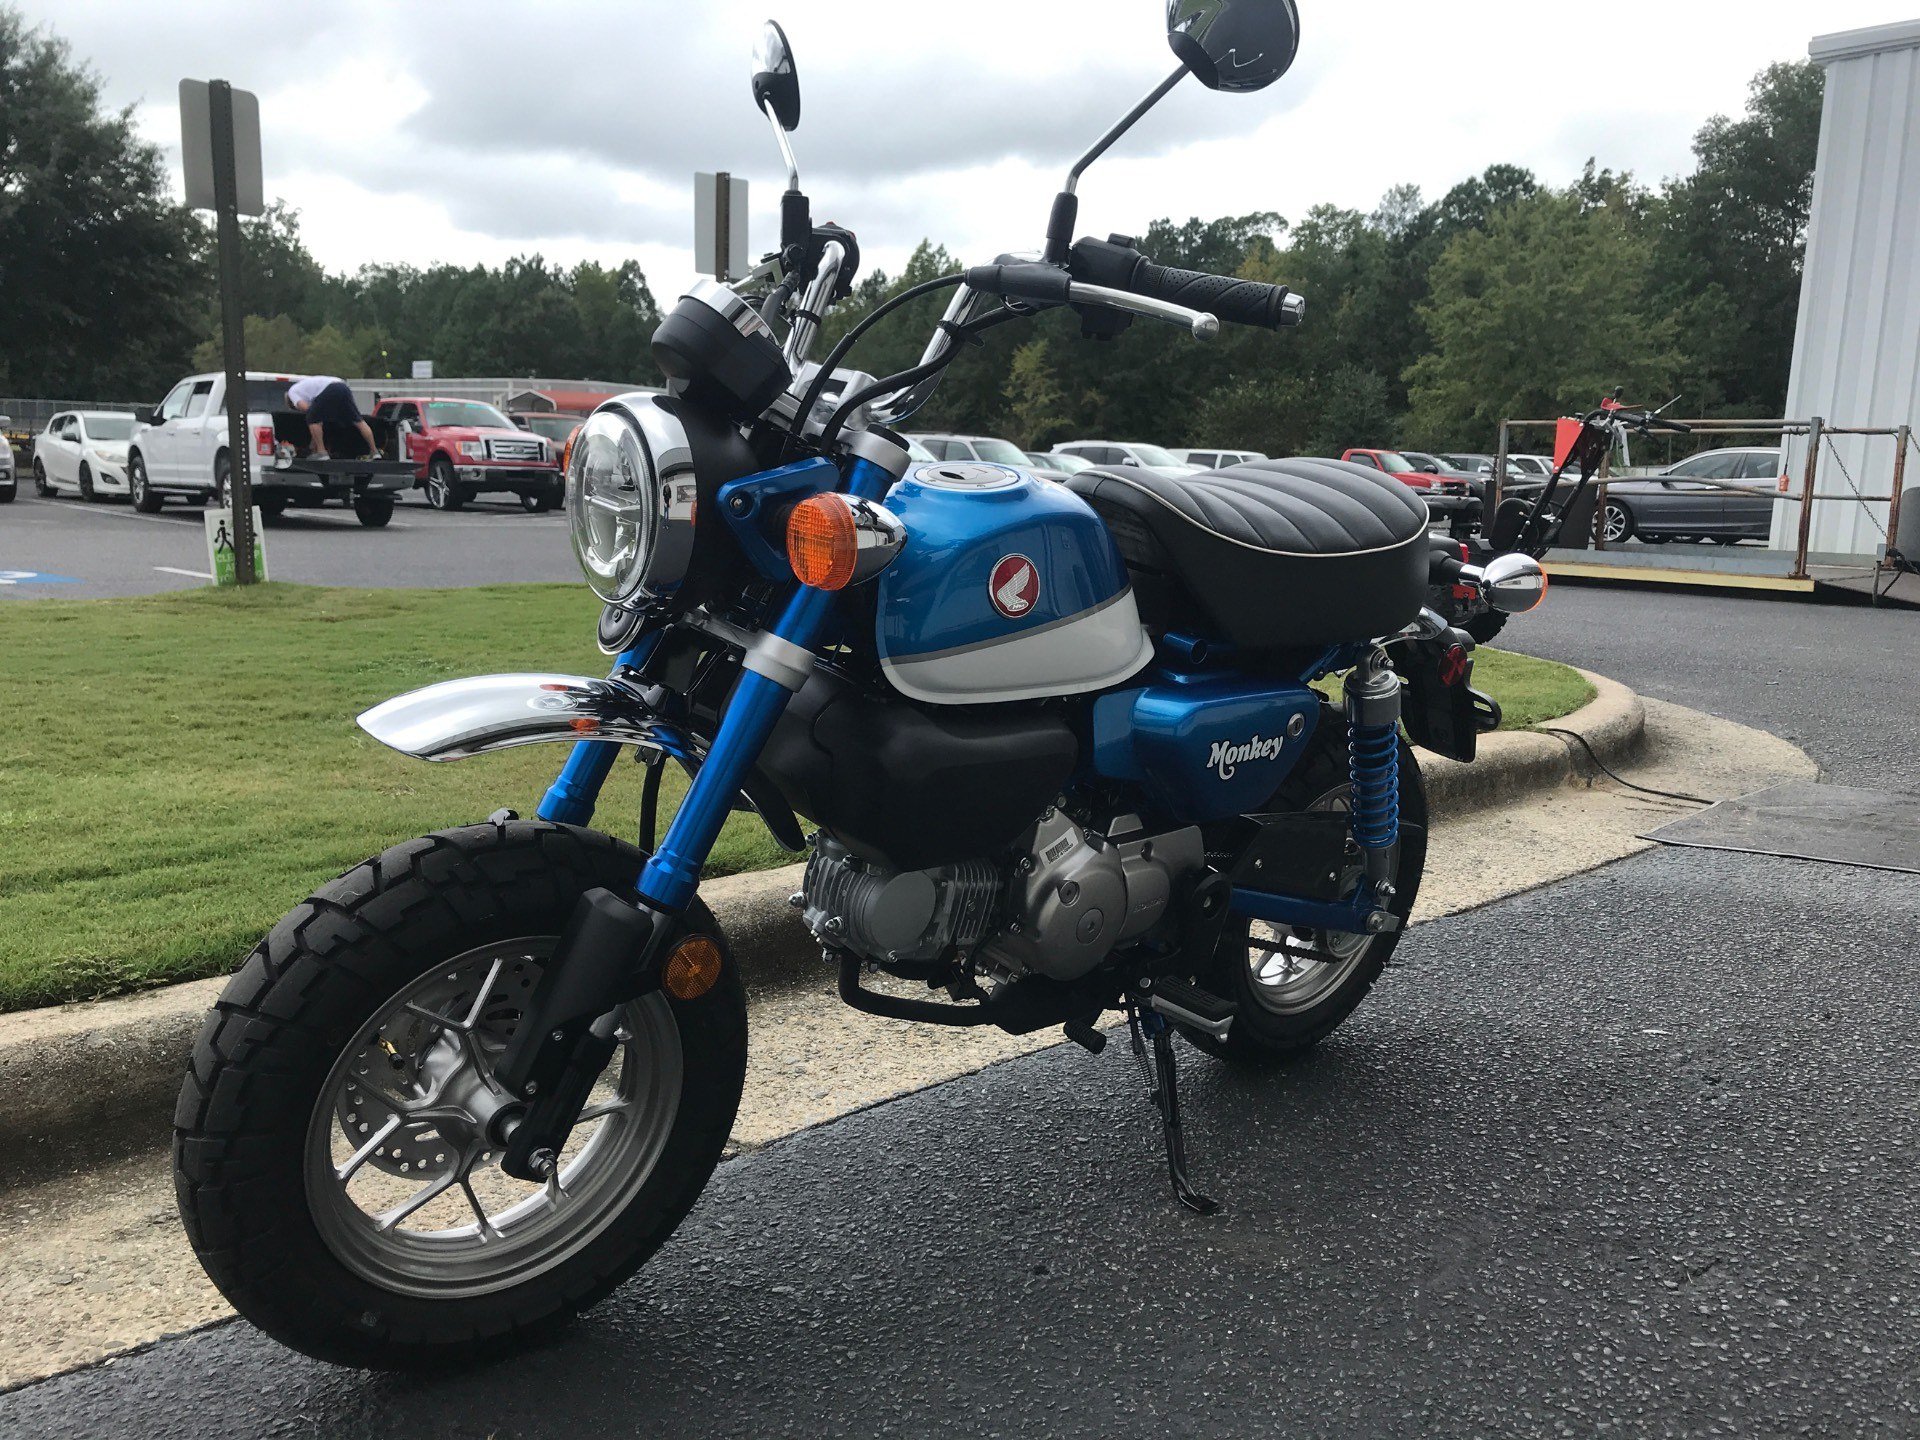 New 2021 Honda Monkey Motorcycles in Greenville, NC ...